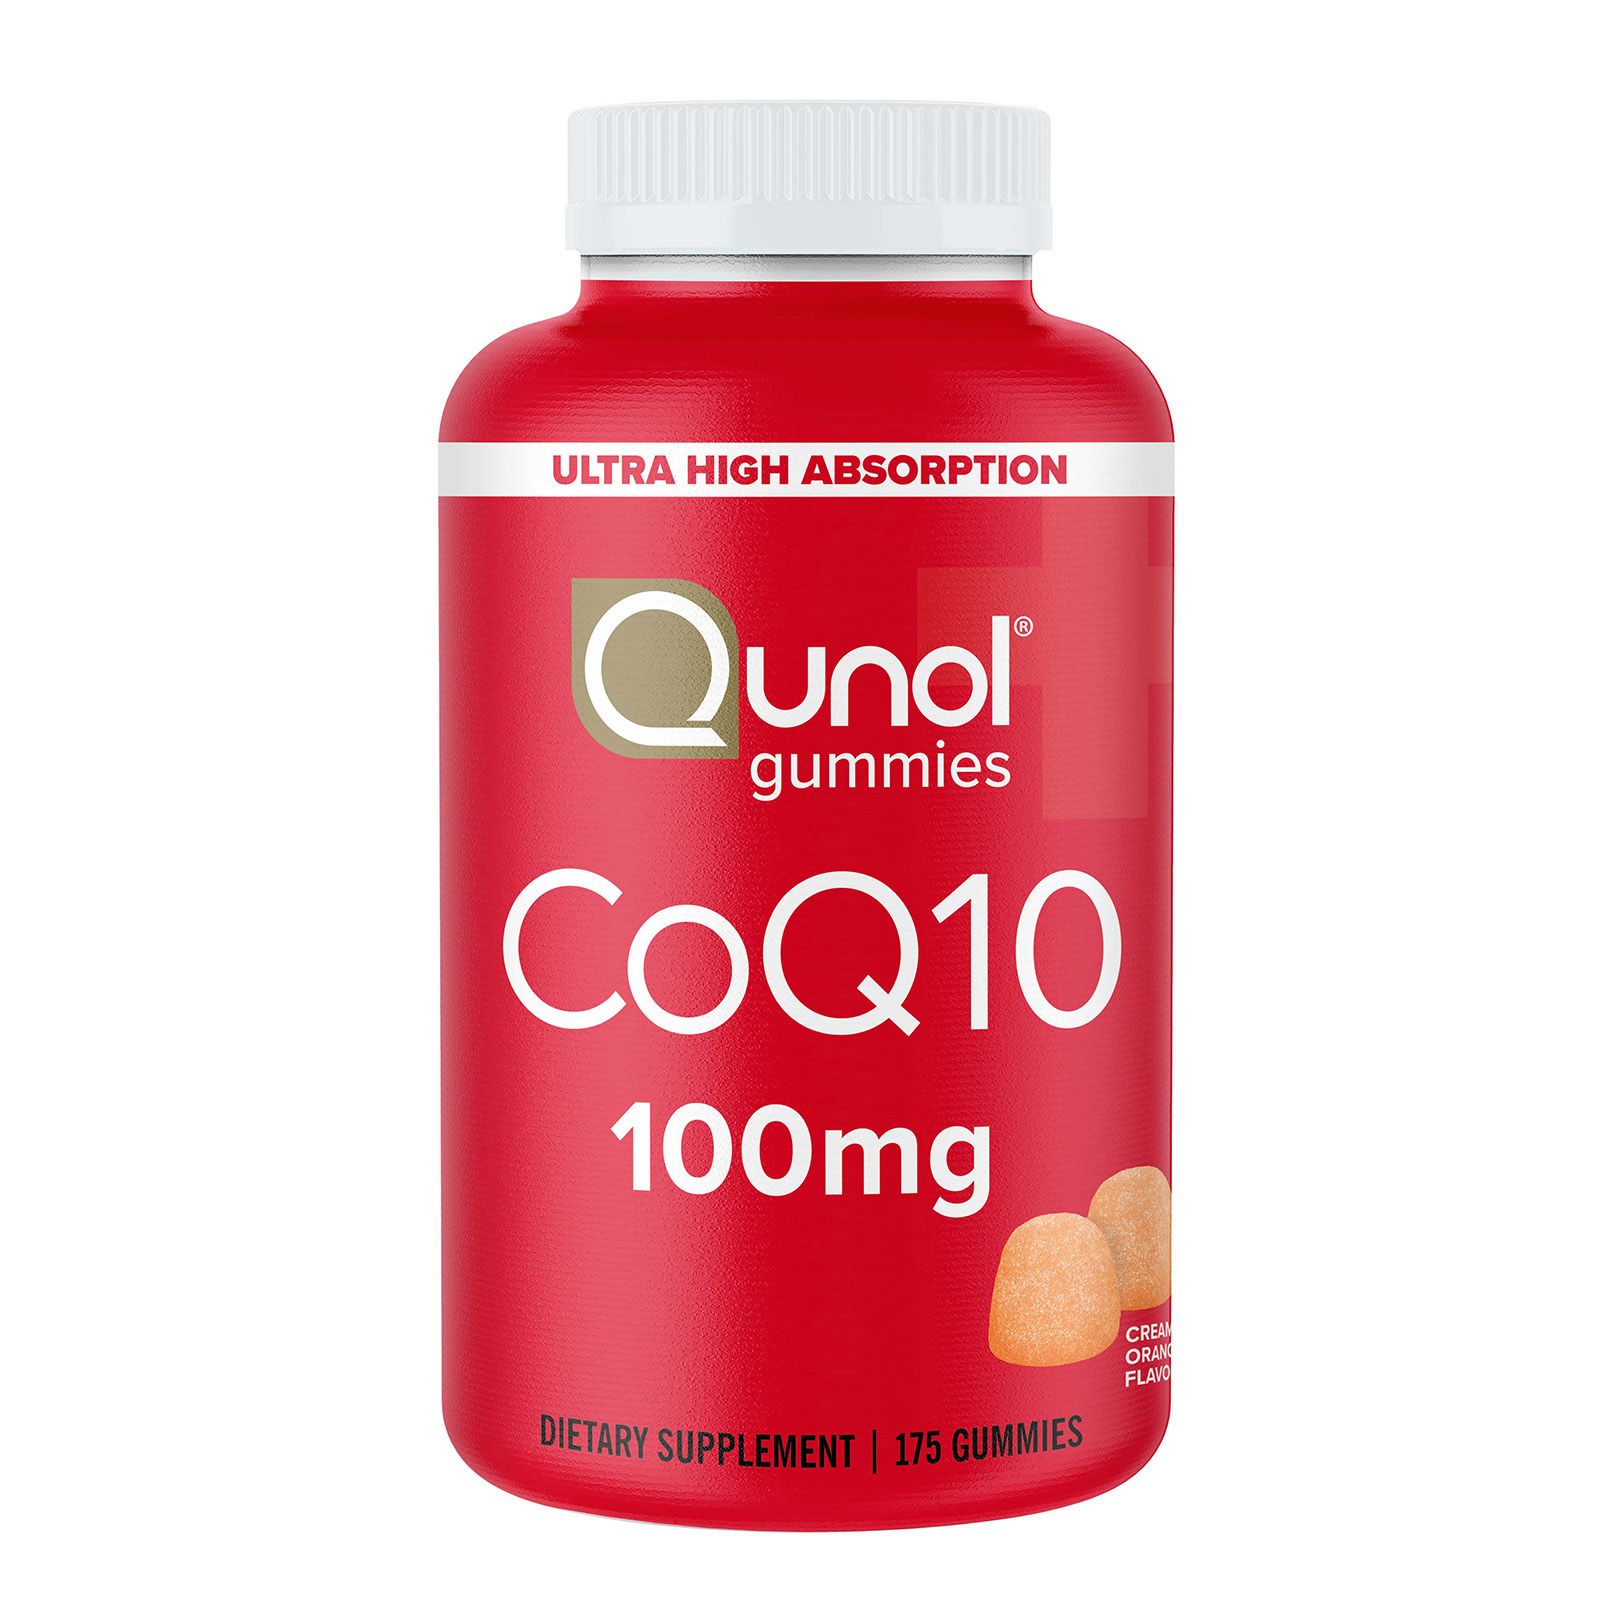 Qunol CoQ10 Gummies, 175 ct.